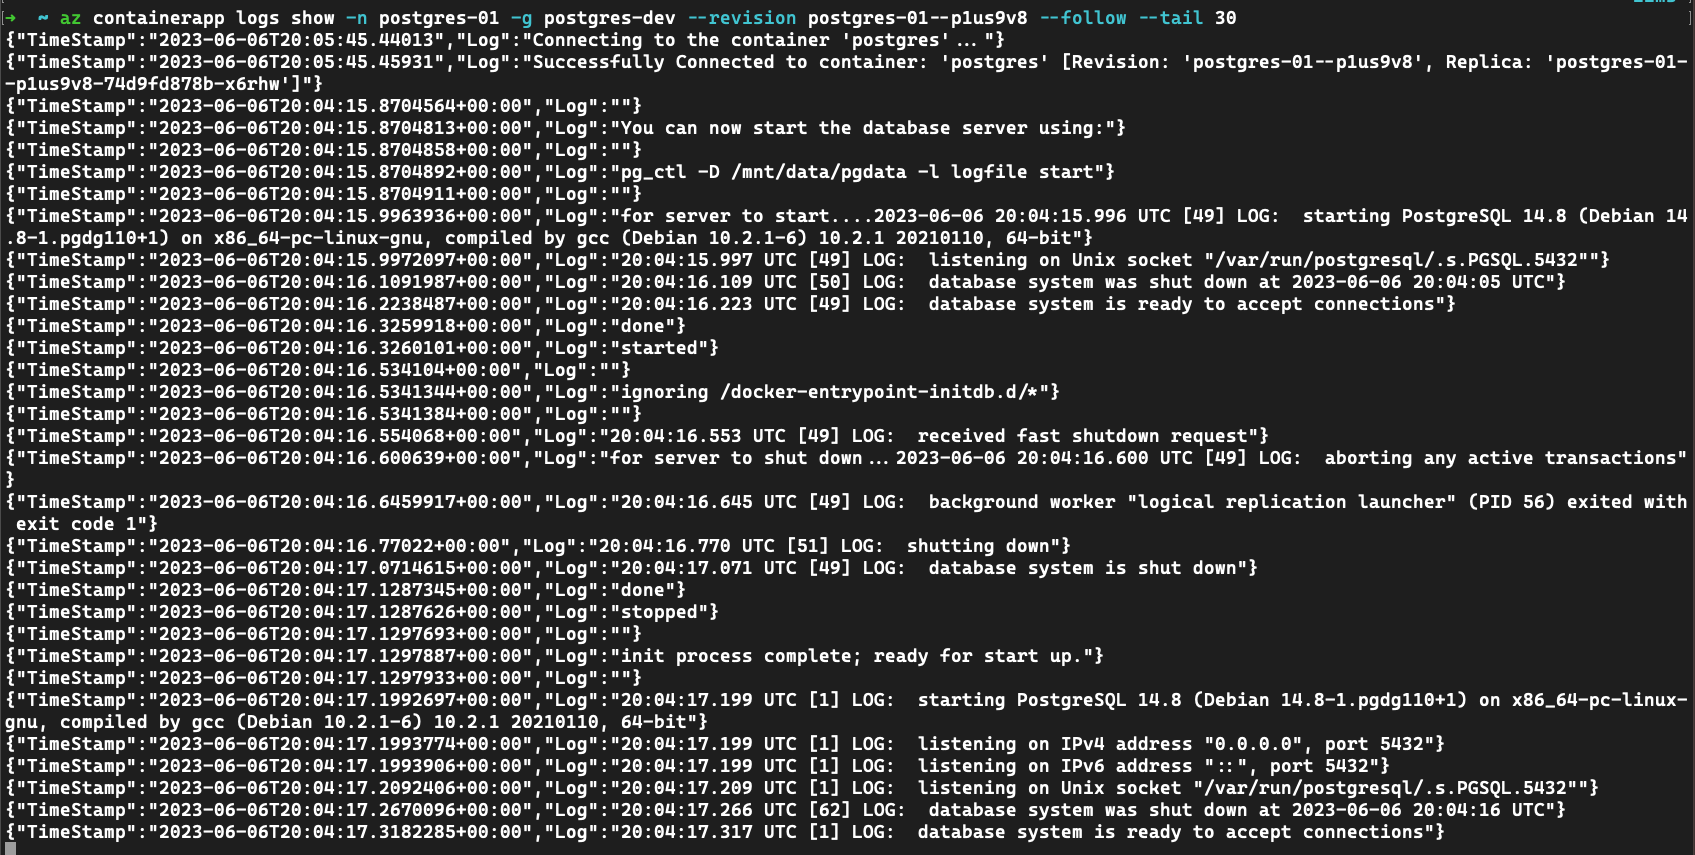 Screenshot of container app PostgreSQL service logs.